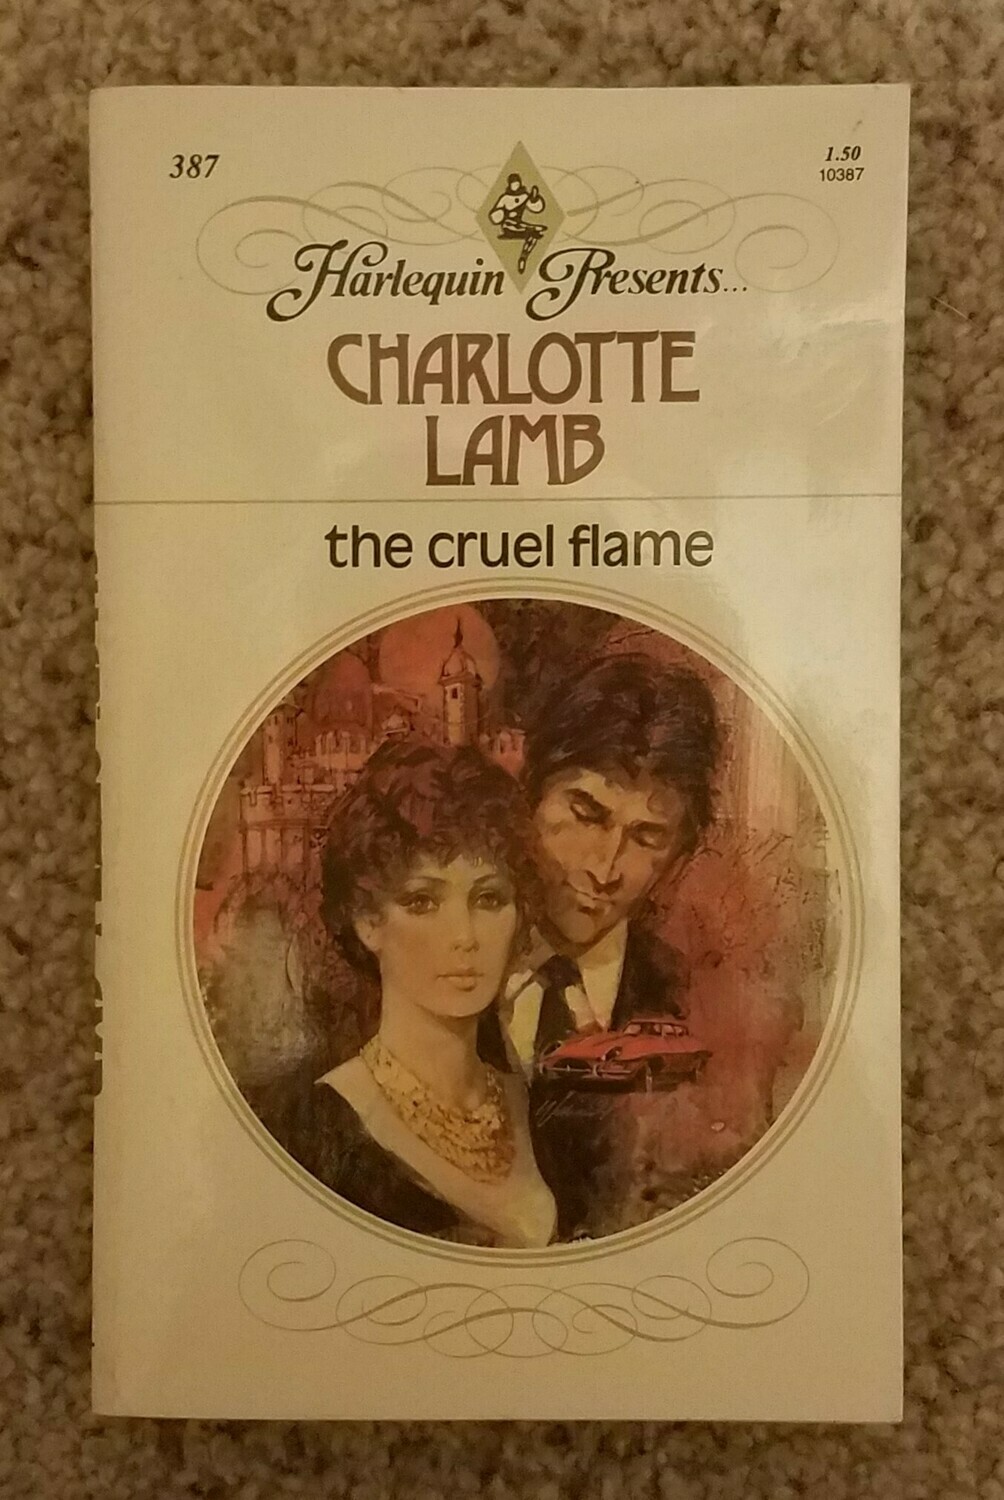 The Cruel Flame by Charlotte Lamb